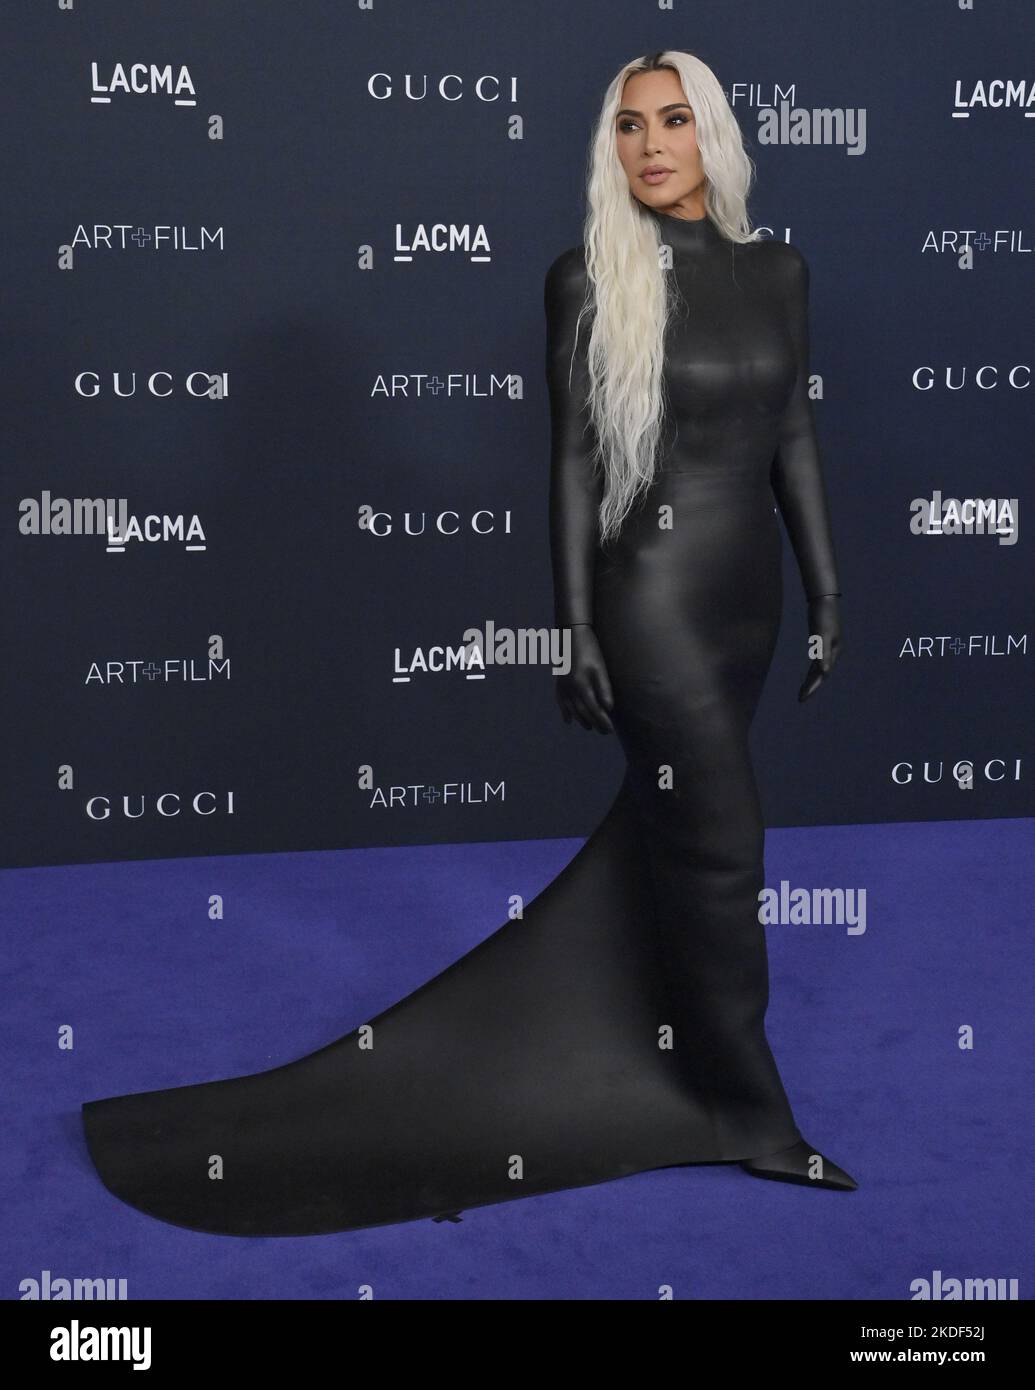 Los Angeles, Stati Uniti. 05th Nov 2022. Kim Kardashian partecipa al LACMA Art Film Gala al Los Angeles County Museum of Art di Los Angeles sabato 5 novembre 2022. Foto di Jim Ruymen/UPI Credit: UPI/Alamy Live News Foto Stock